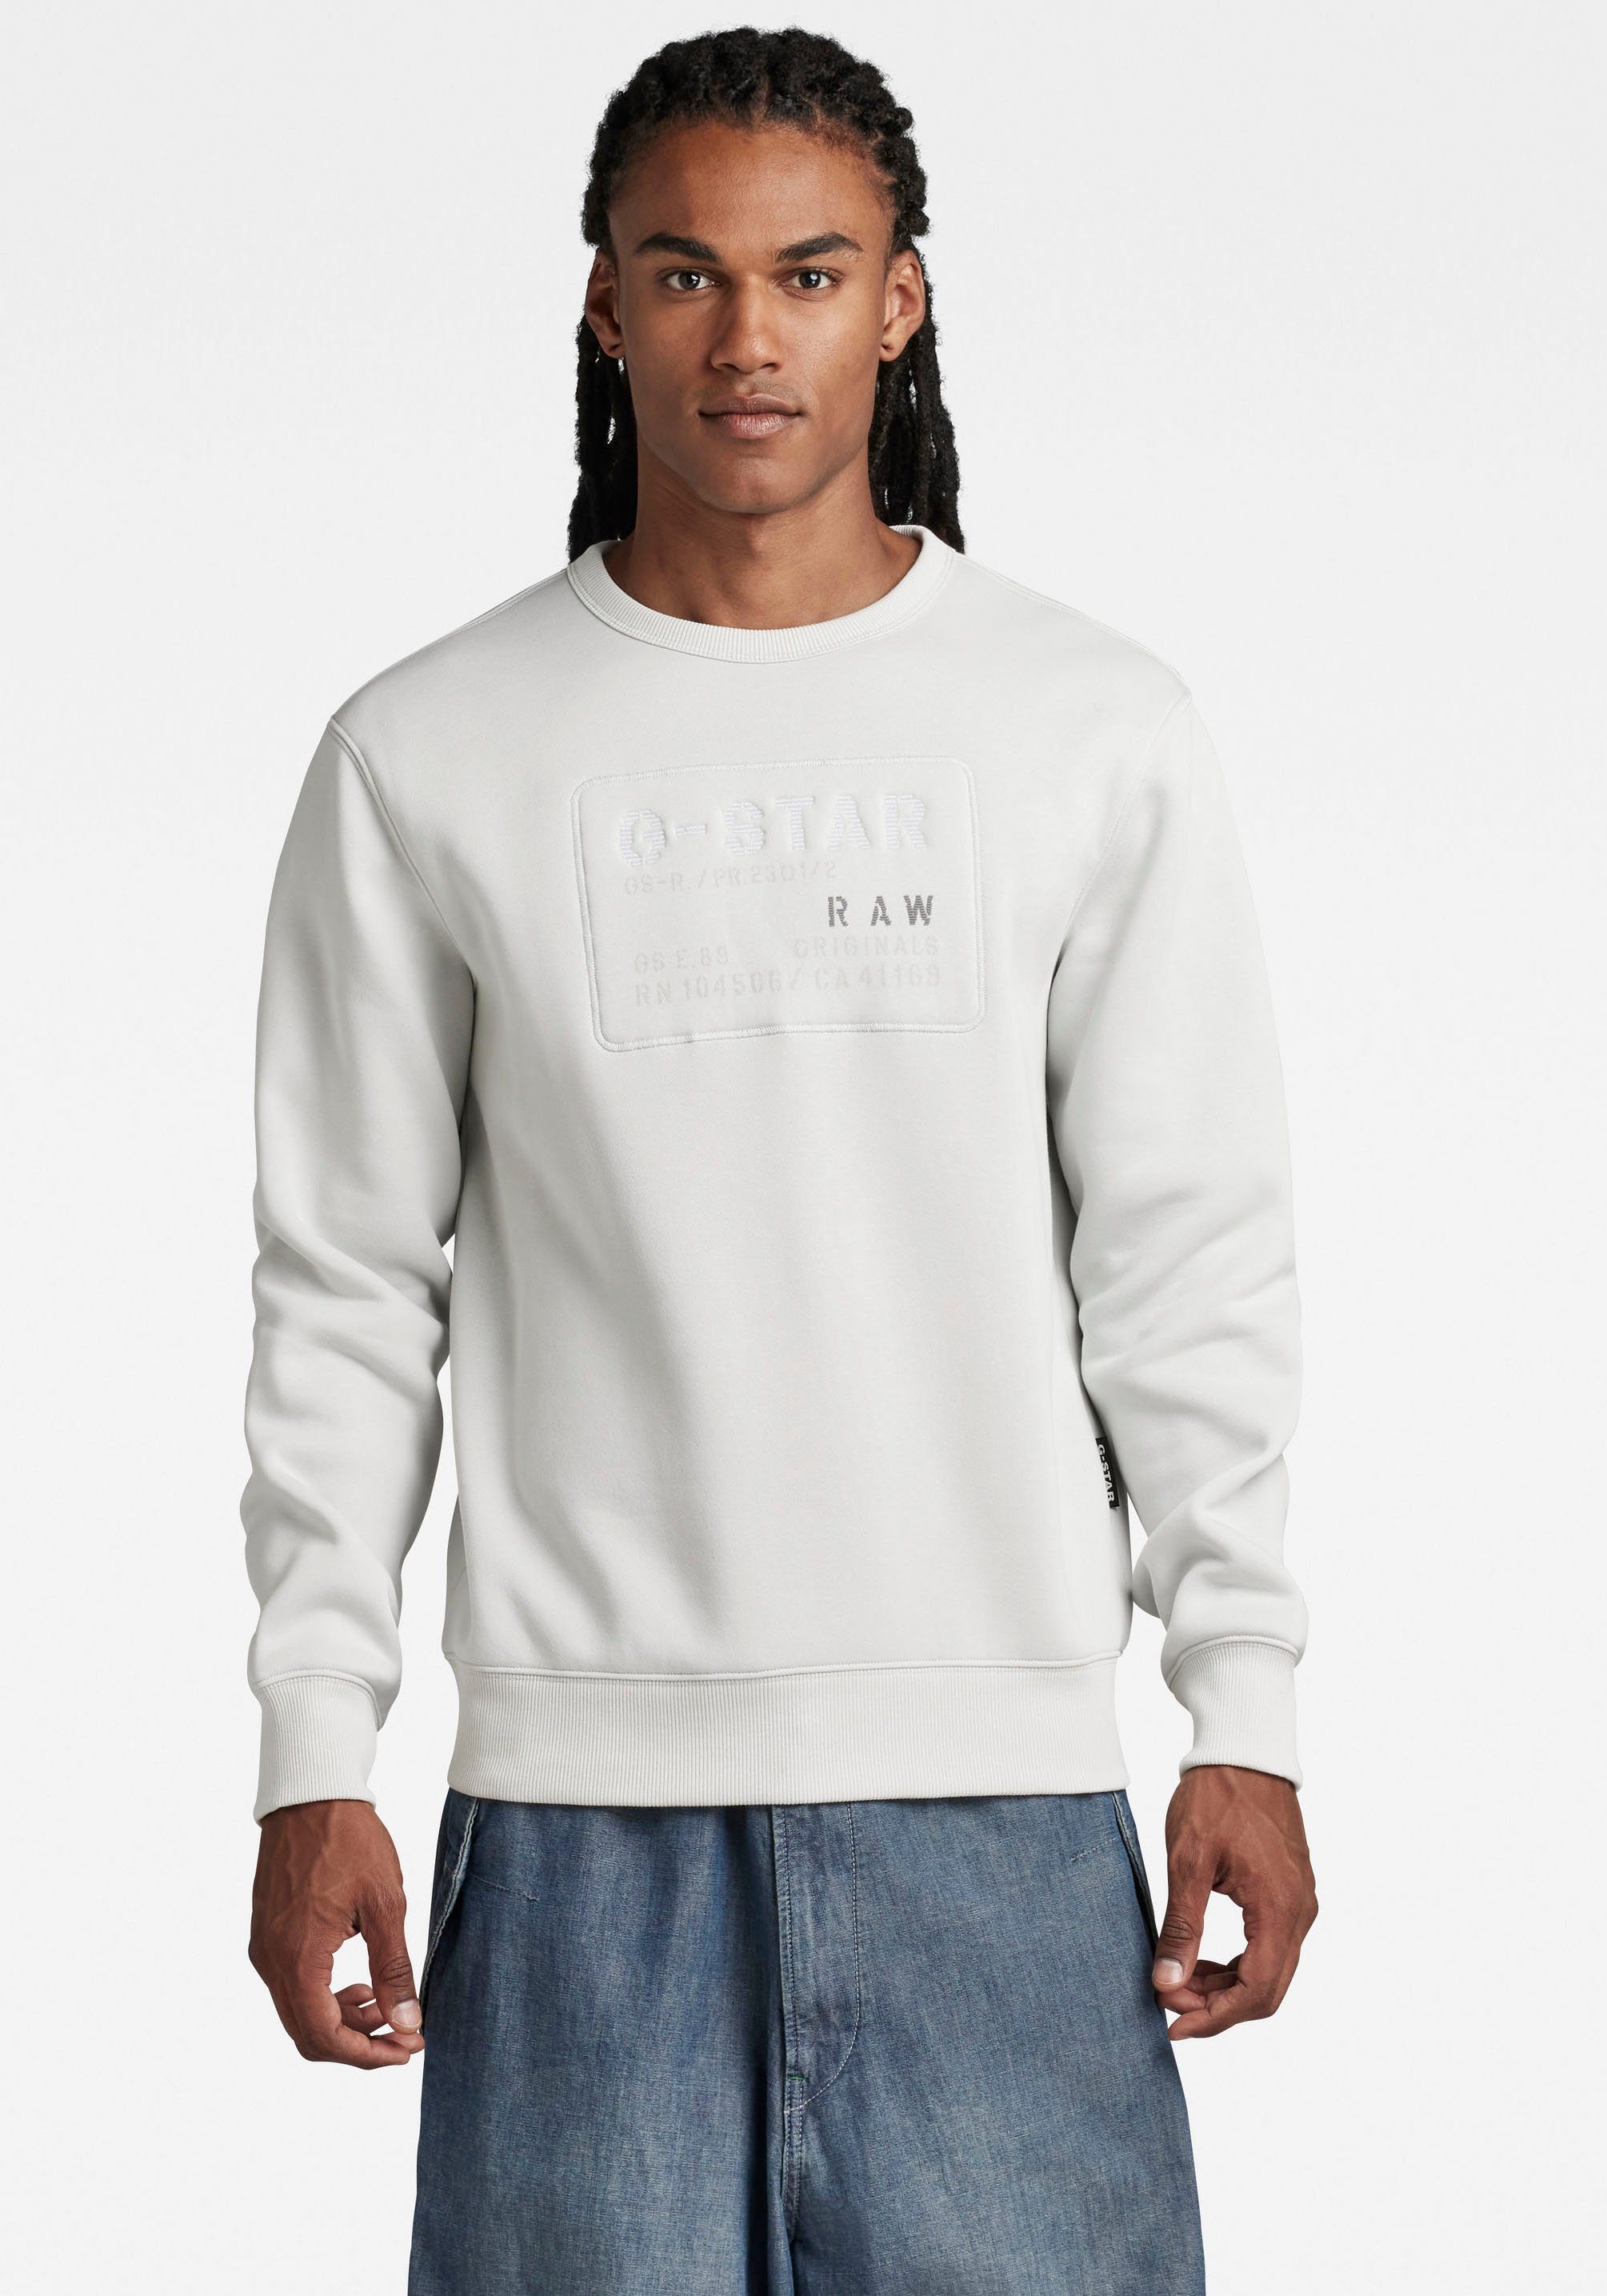 G-Star RAW Sweatshirt Sweatshirt Originals Oyster mushroom | Sweatshirts